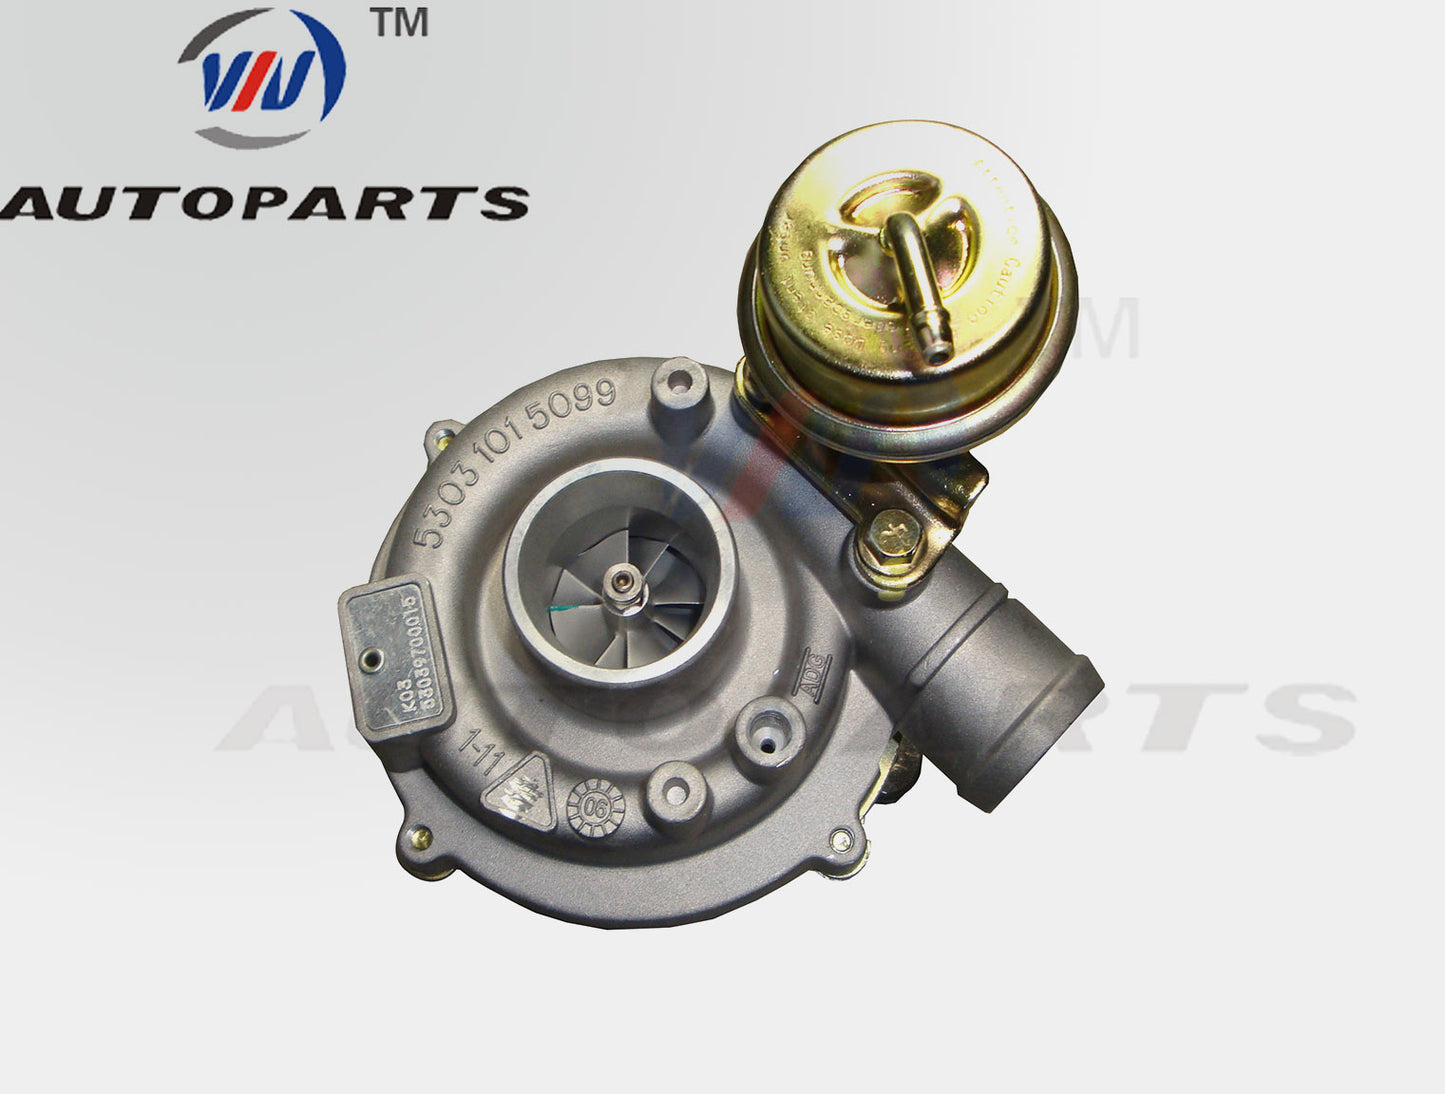 Turbocharger 53039880015 for Audi Skoda Volkswagen varies 1.9L Diesel Engine